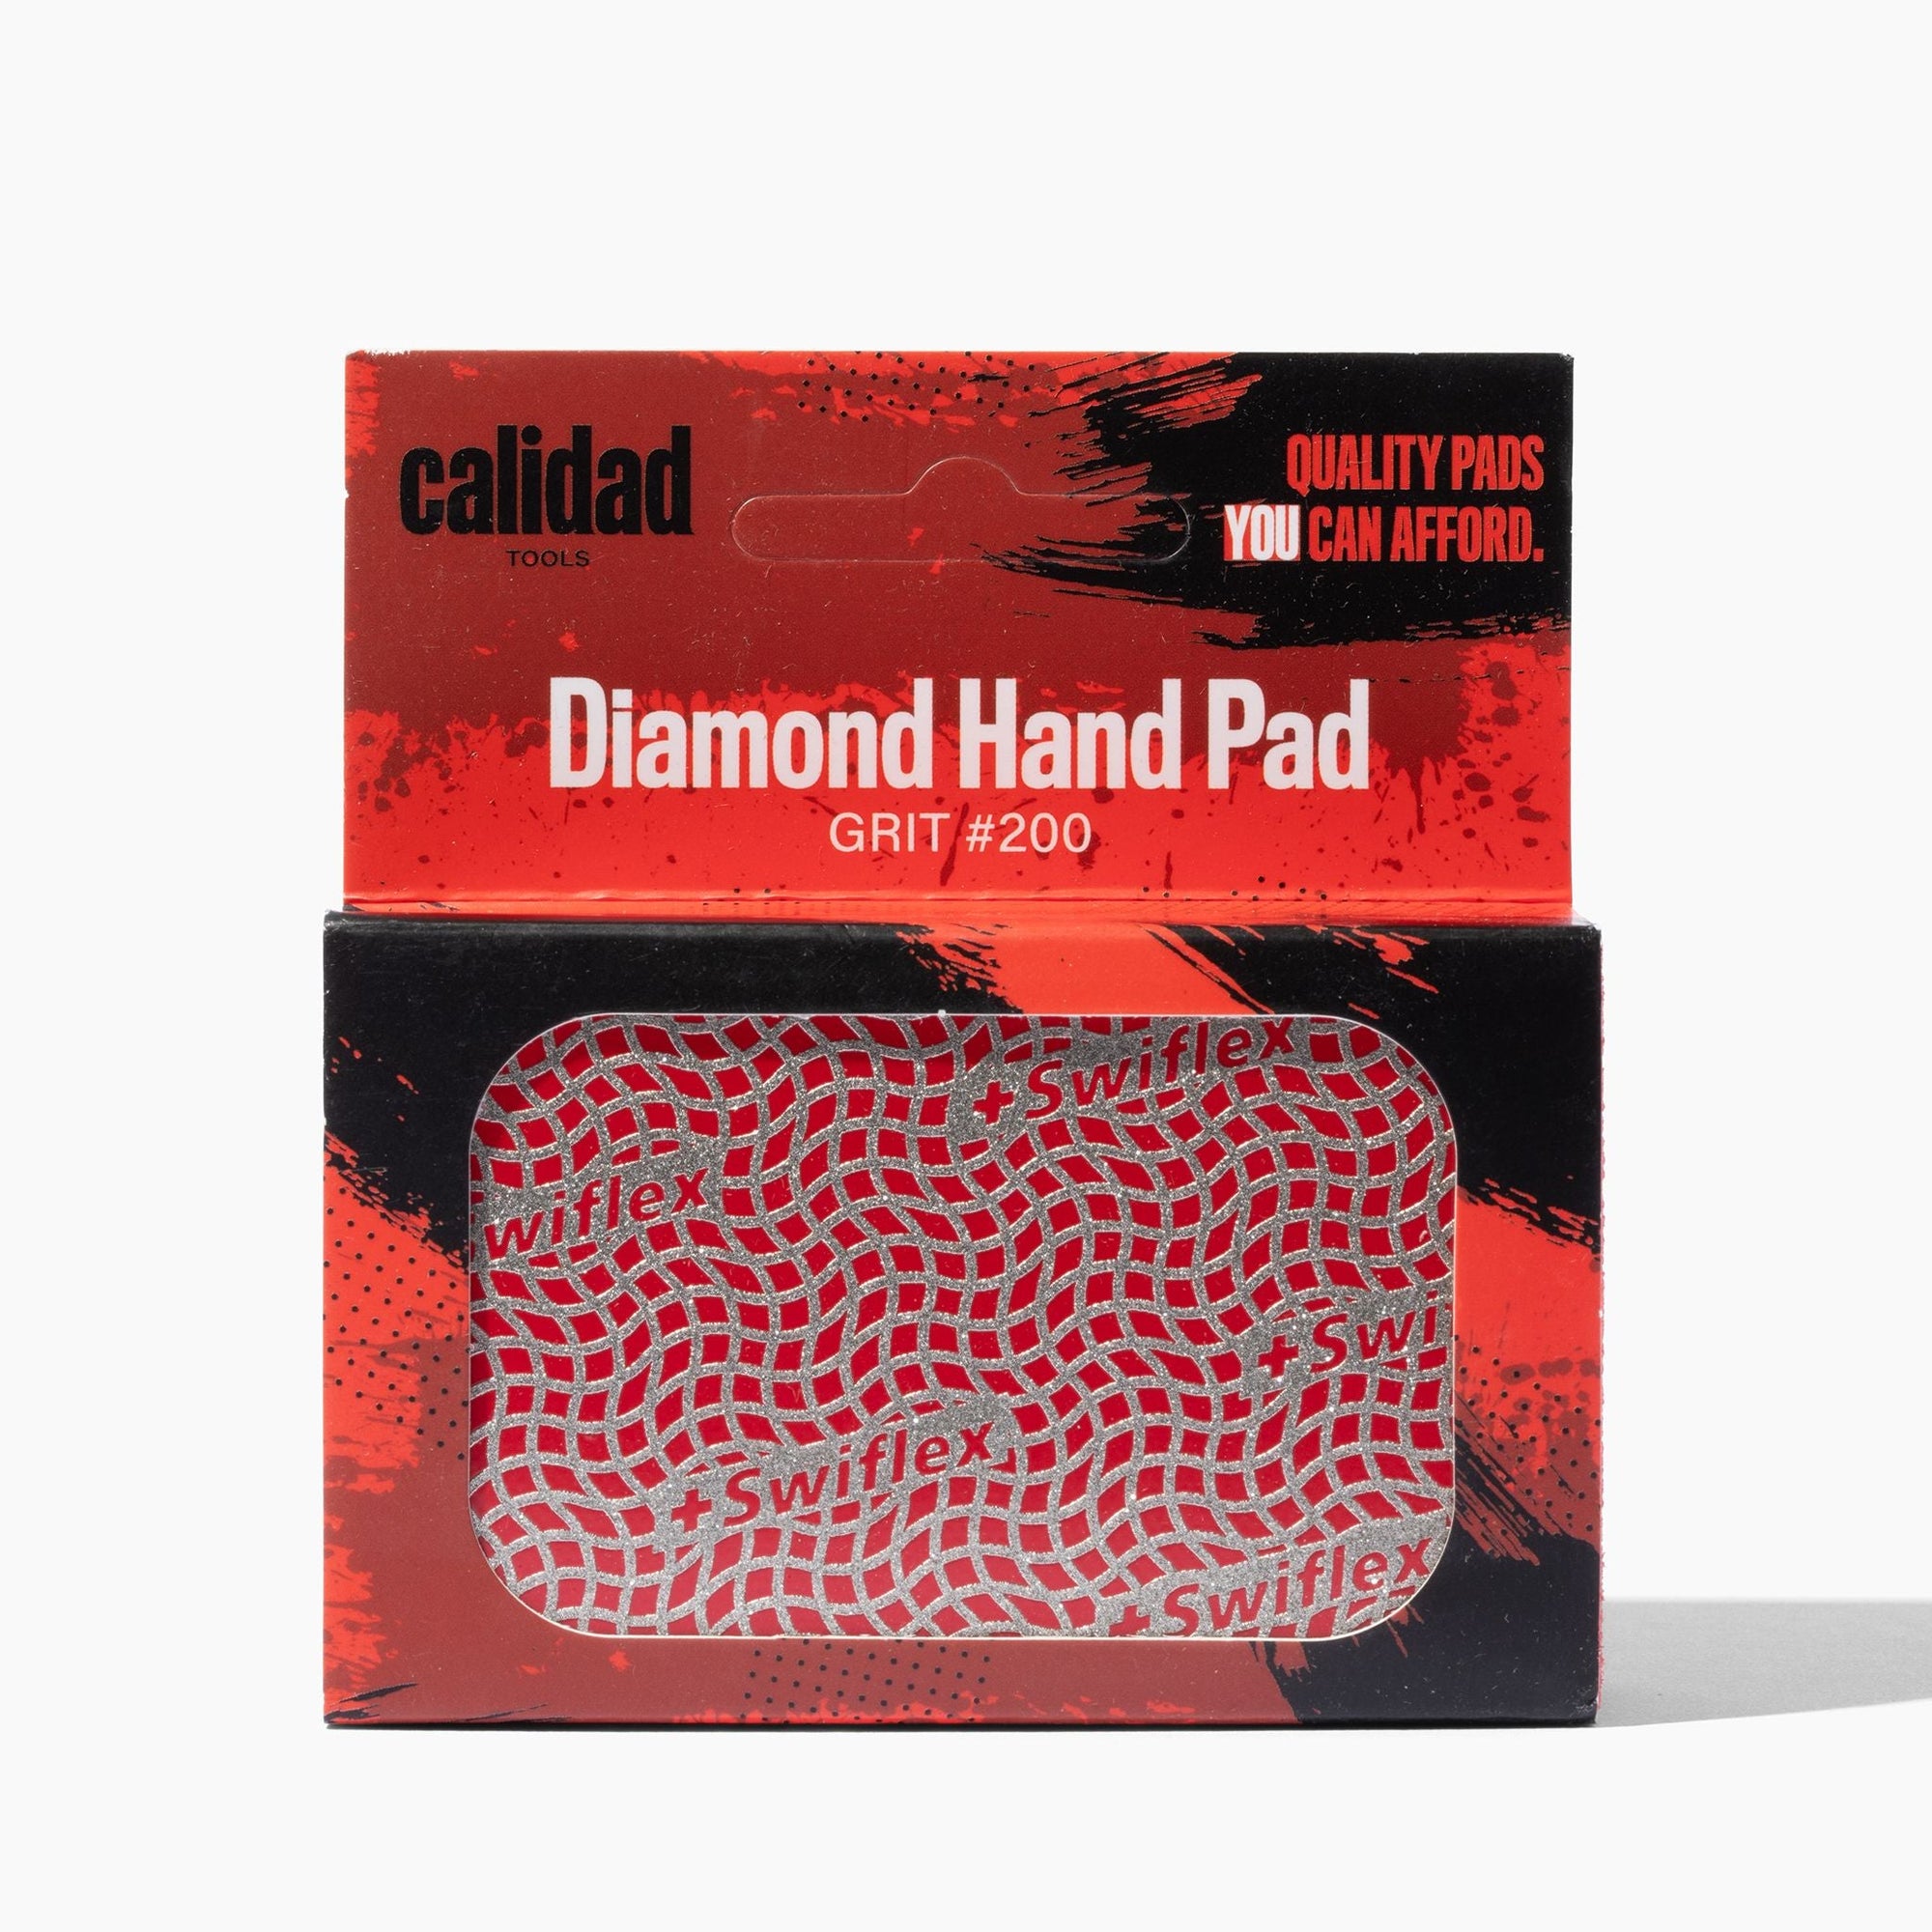 Calidad Diamond Hand Pad Grit #200 - Calidad Tools